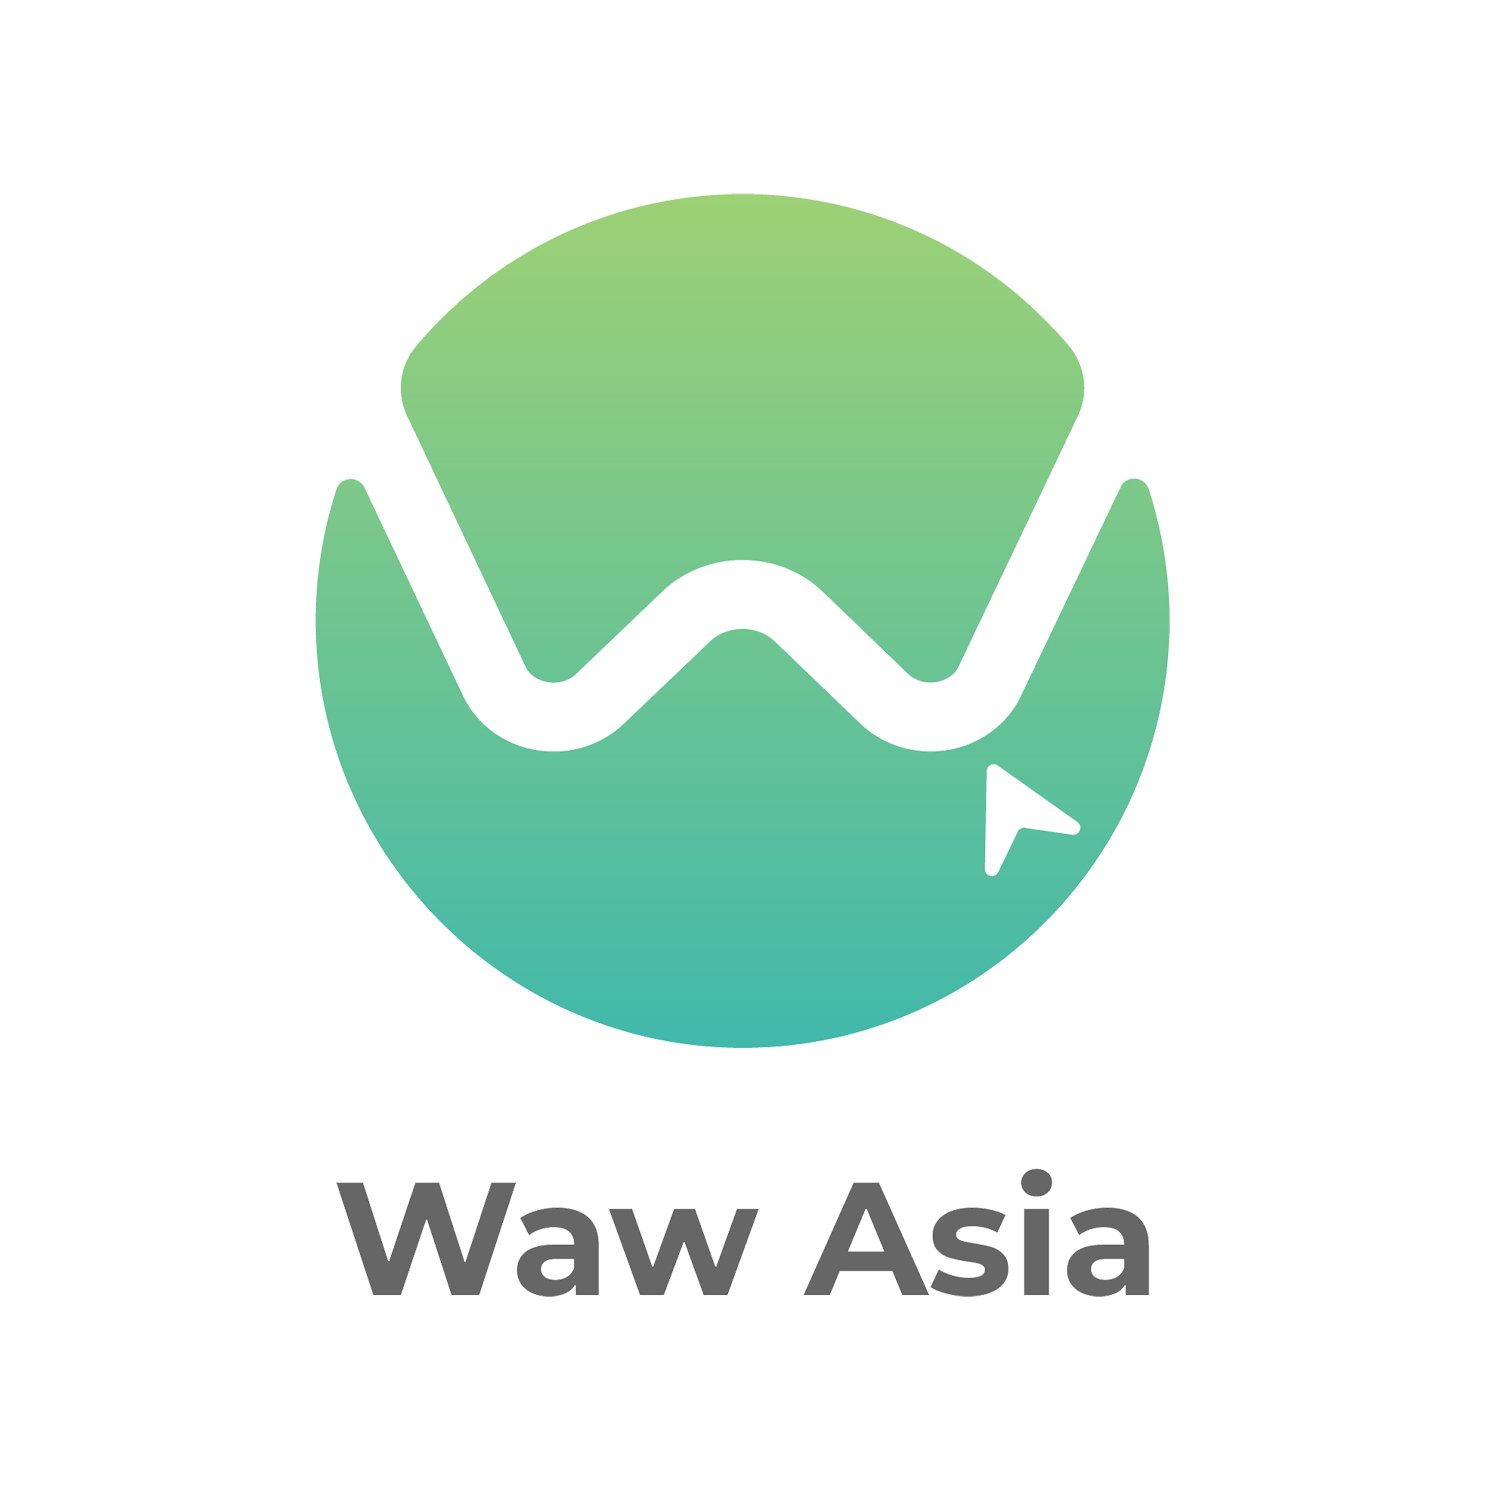 Waw Asia (Vietnam) on databroker